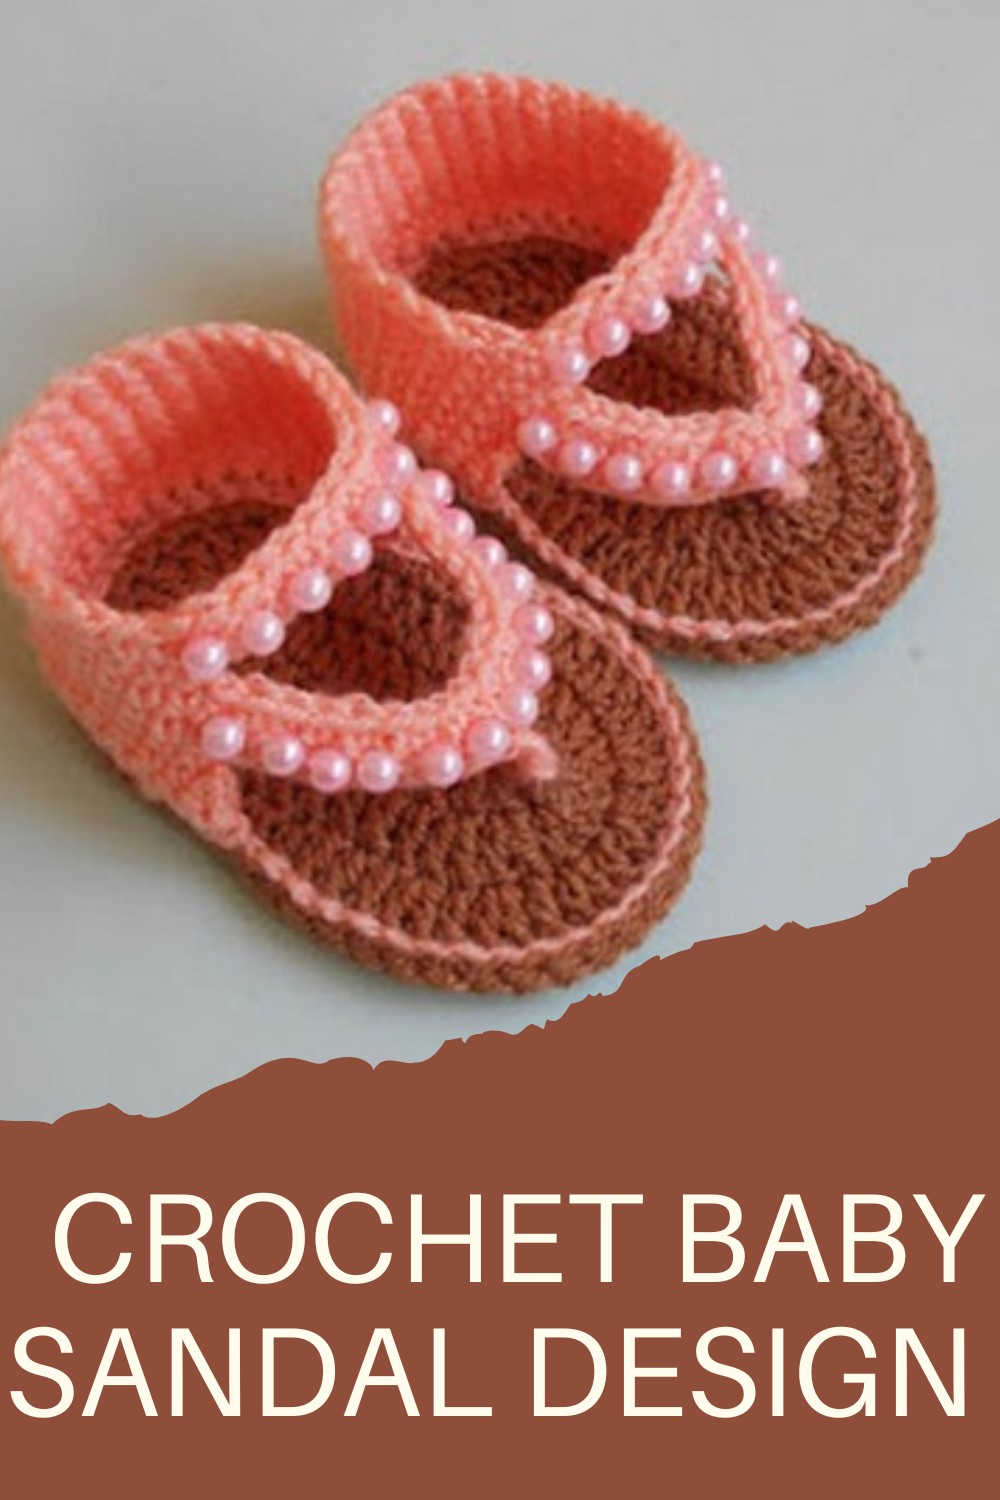 How To Crochet Baby Sandal Design Pattern